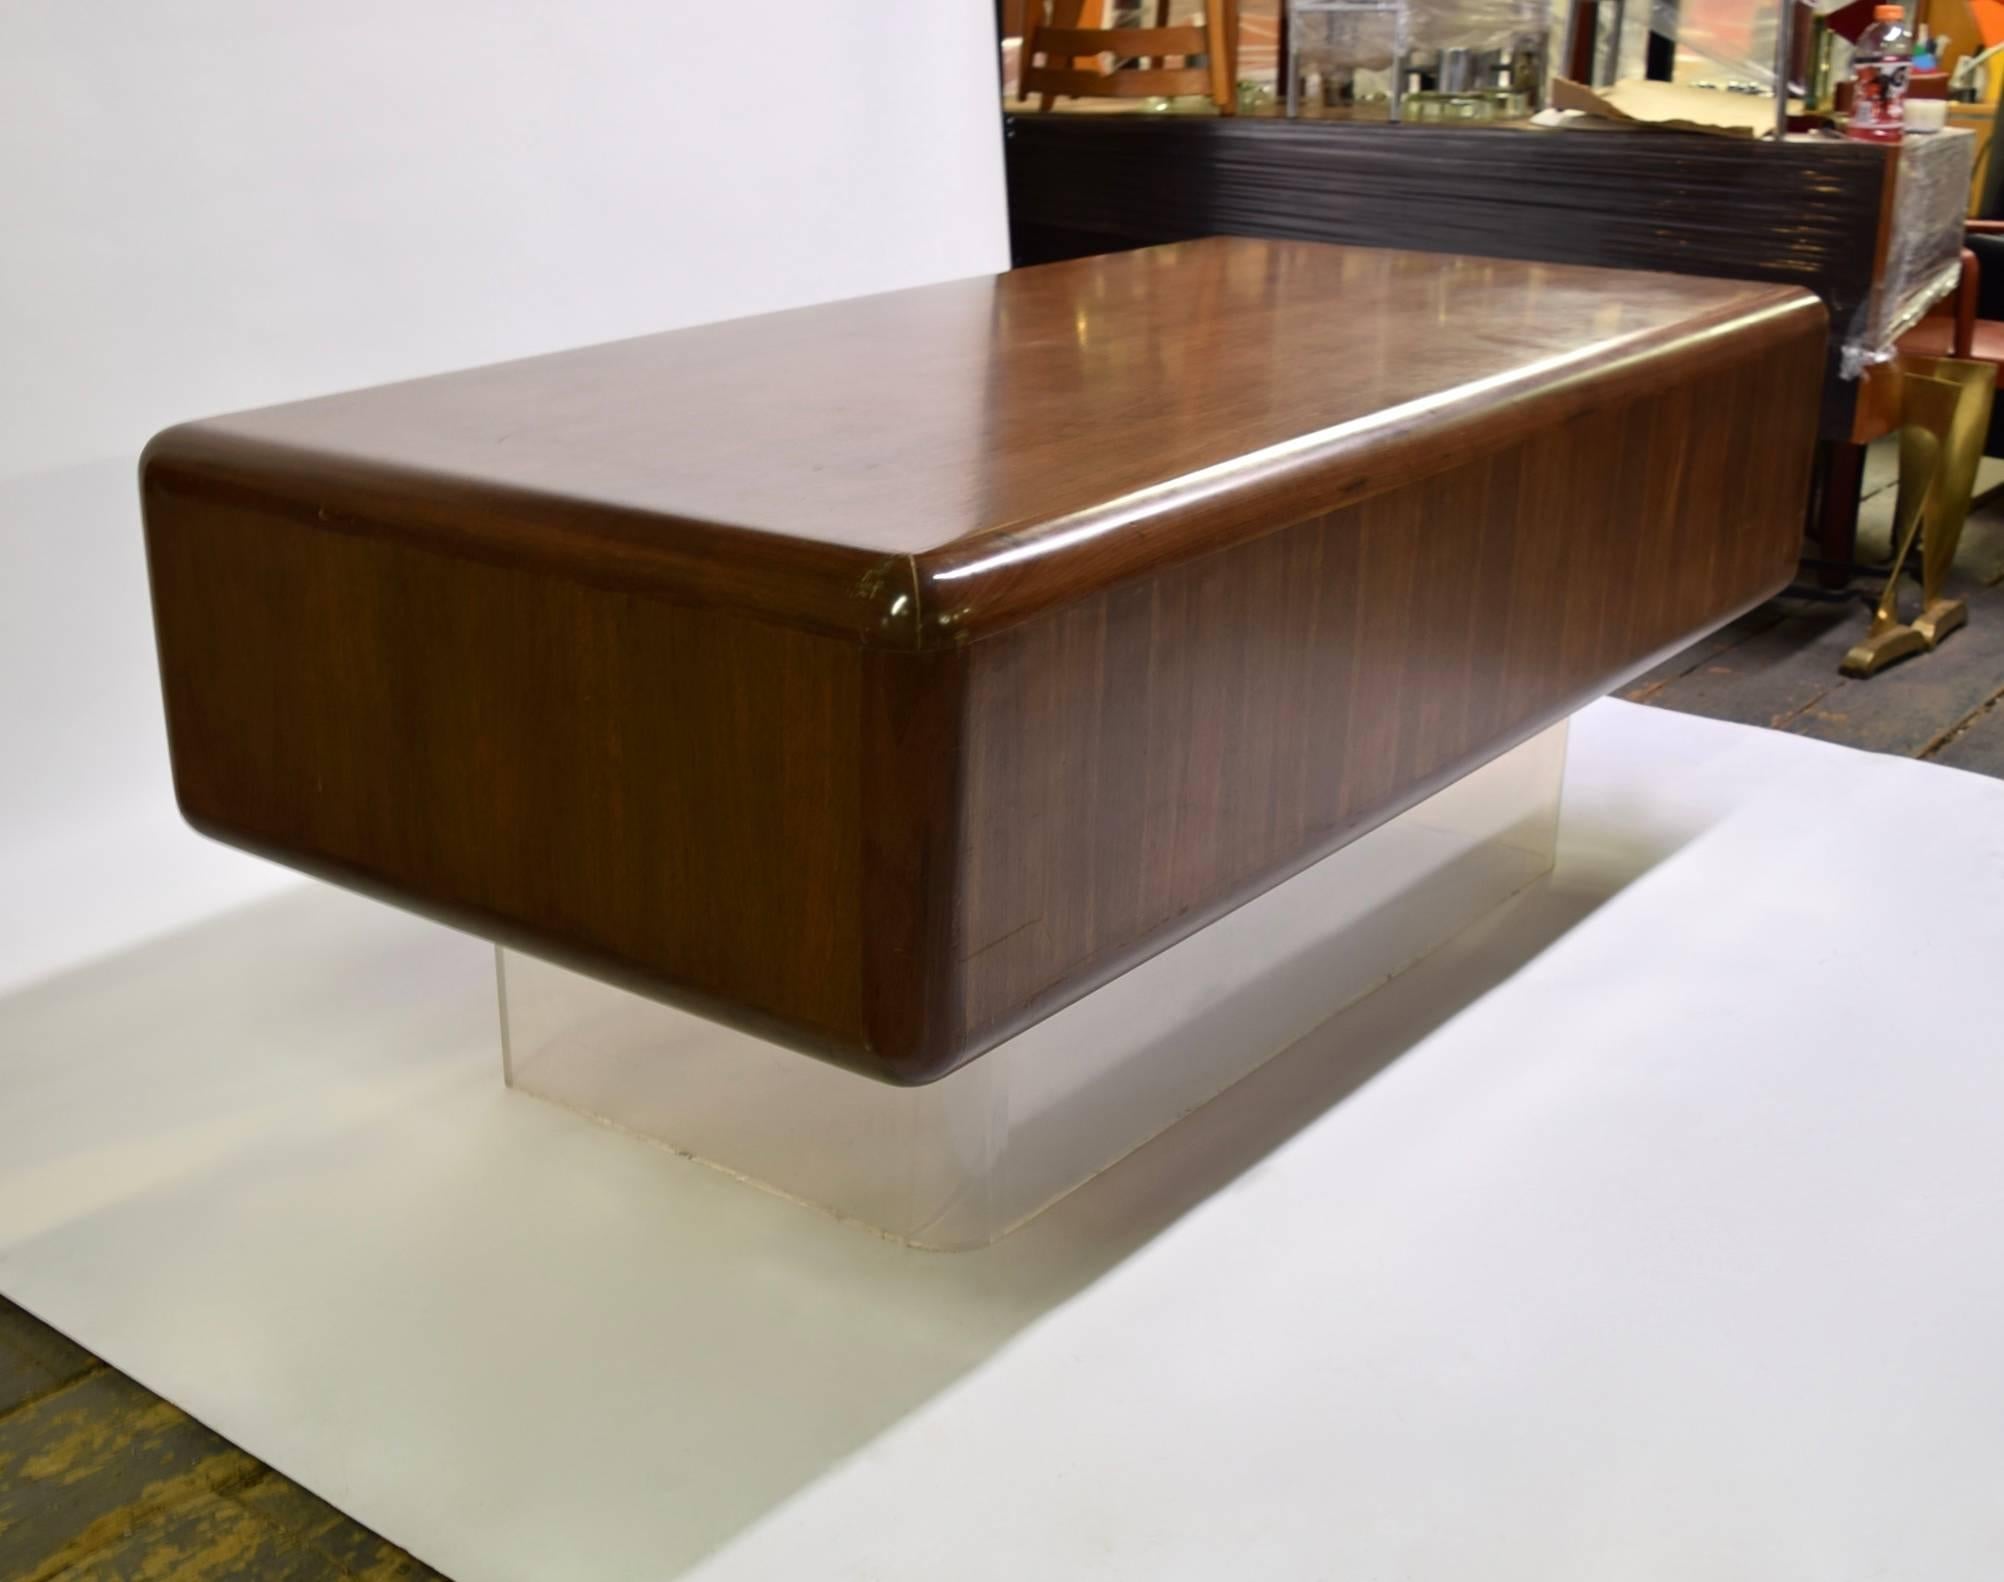 American Solid Walnut Desk Designed by Vladimir Kagan, circa 1965, Made in USA